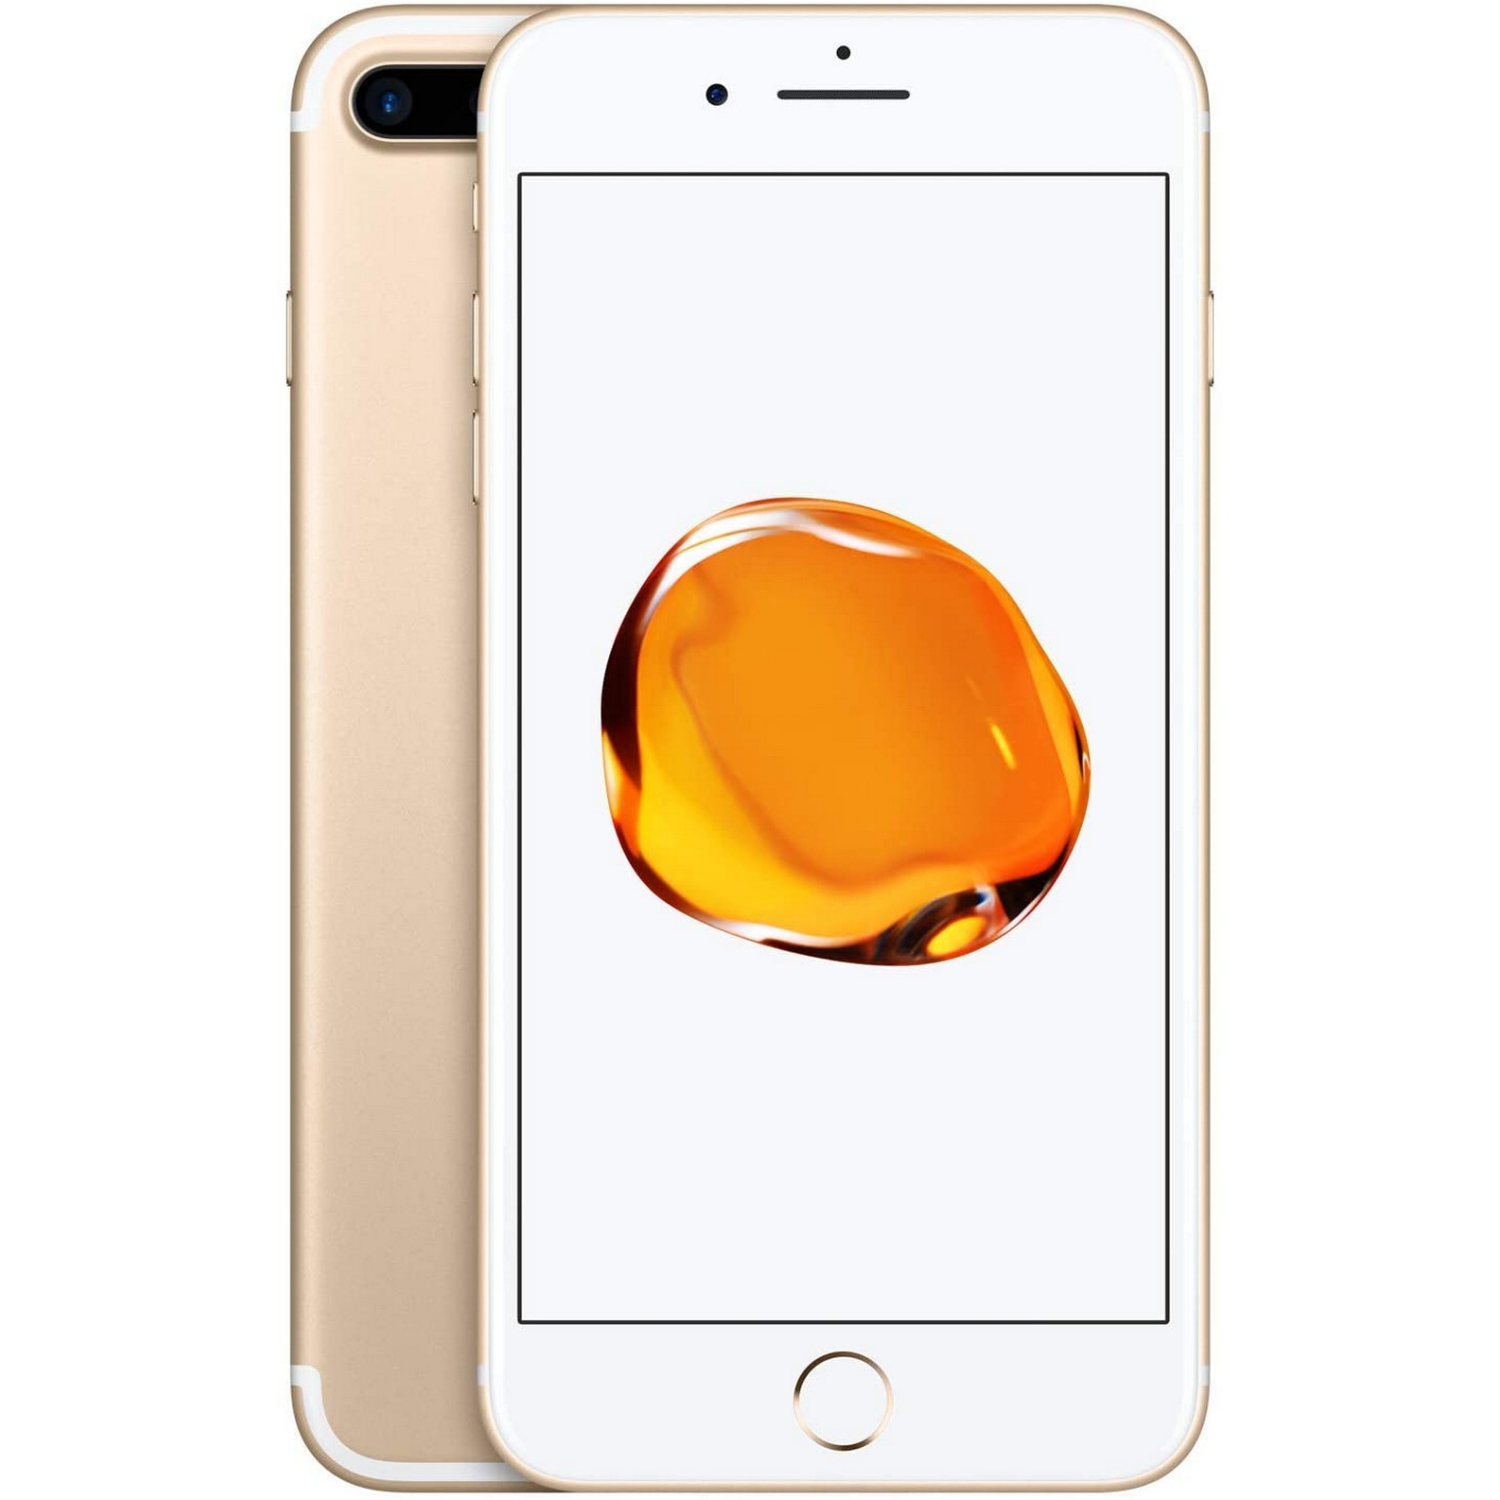 Refurbished (Good) - Apple iPhone 7 32GB Smartphone - Gold - Unlocked